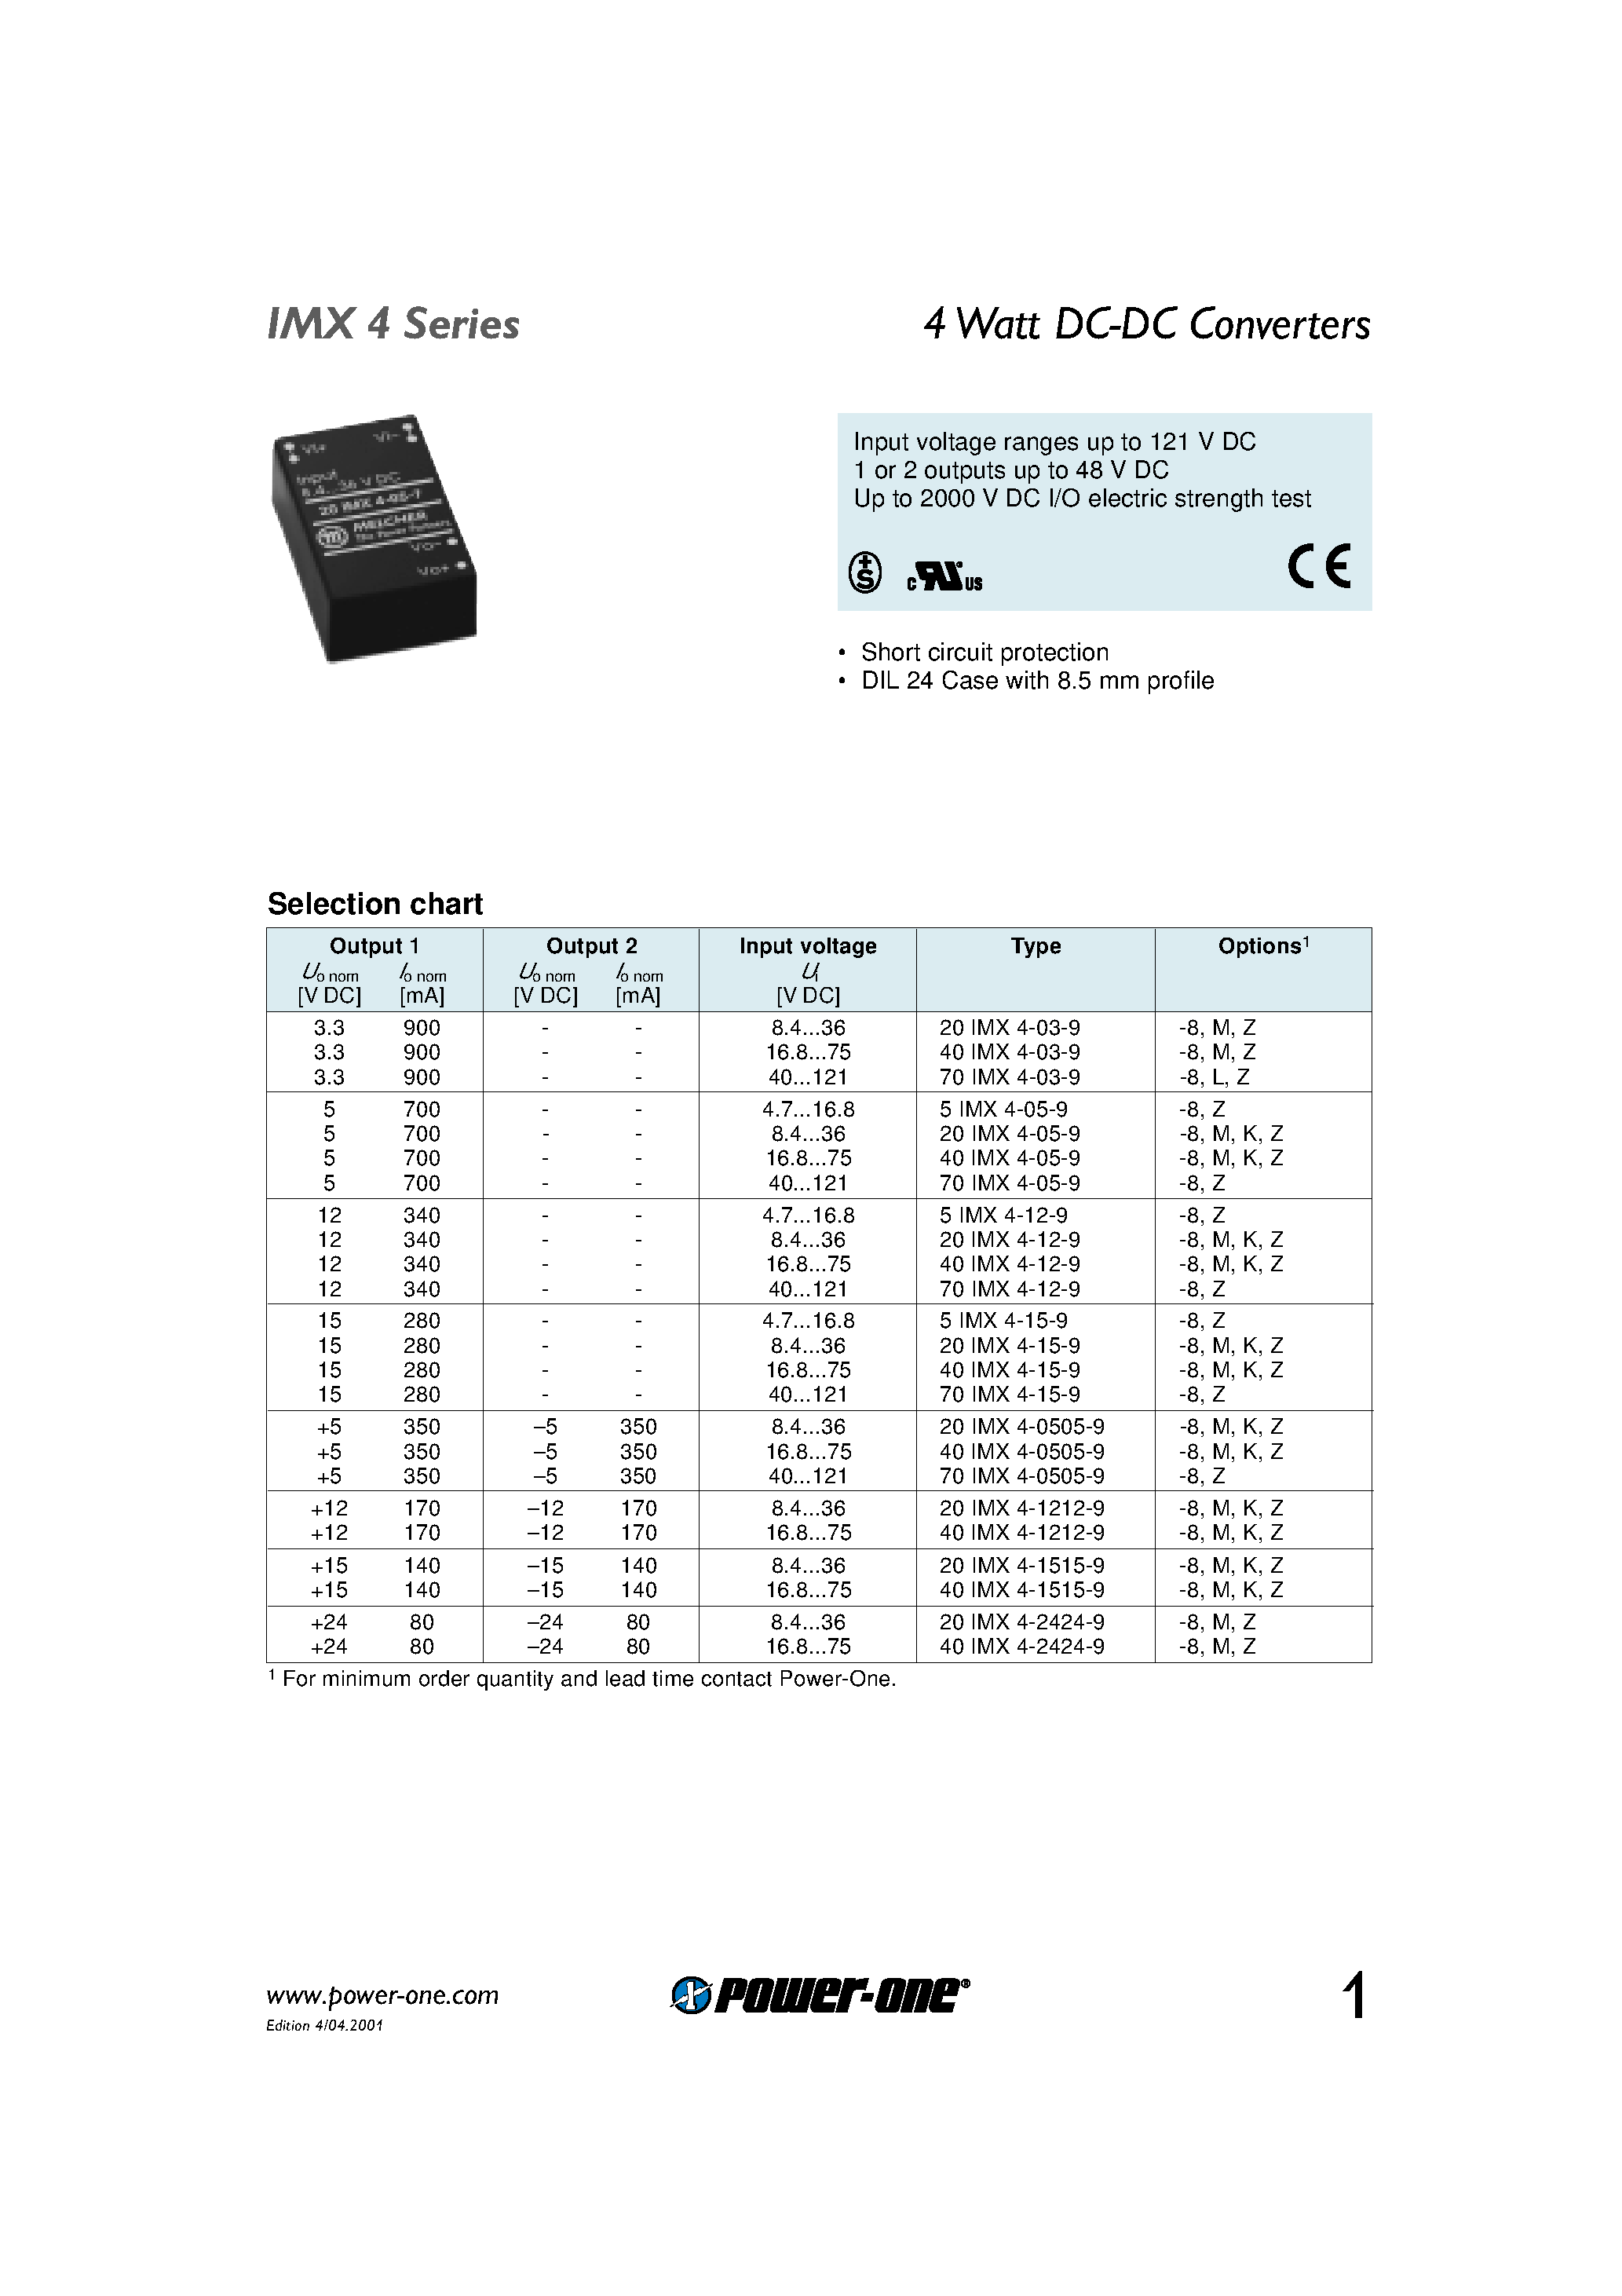 Даташит 40IMX4-2424-9 - 4 Watt DC-DC Converters страница 1